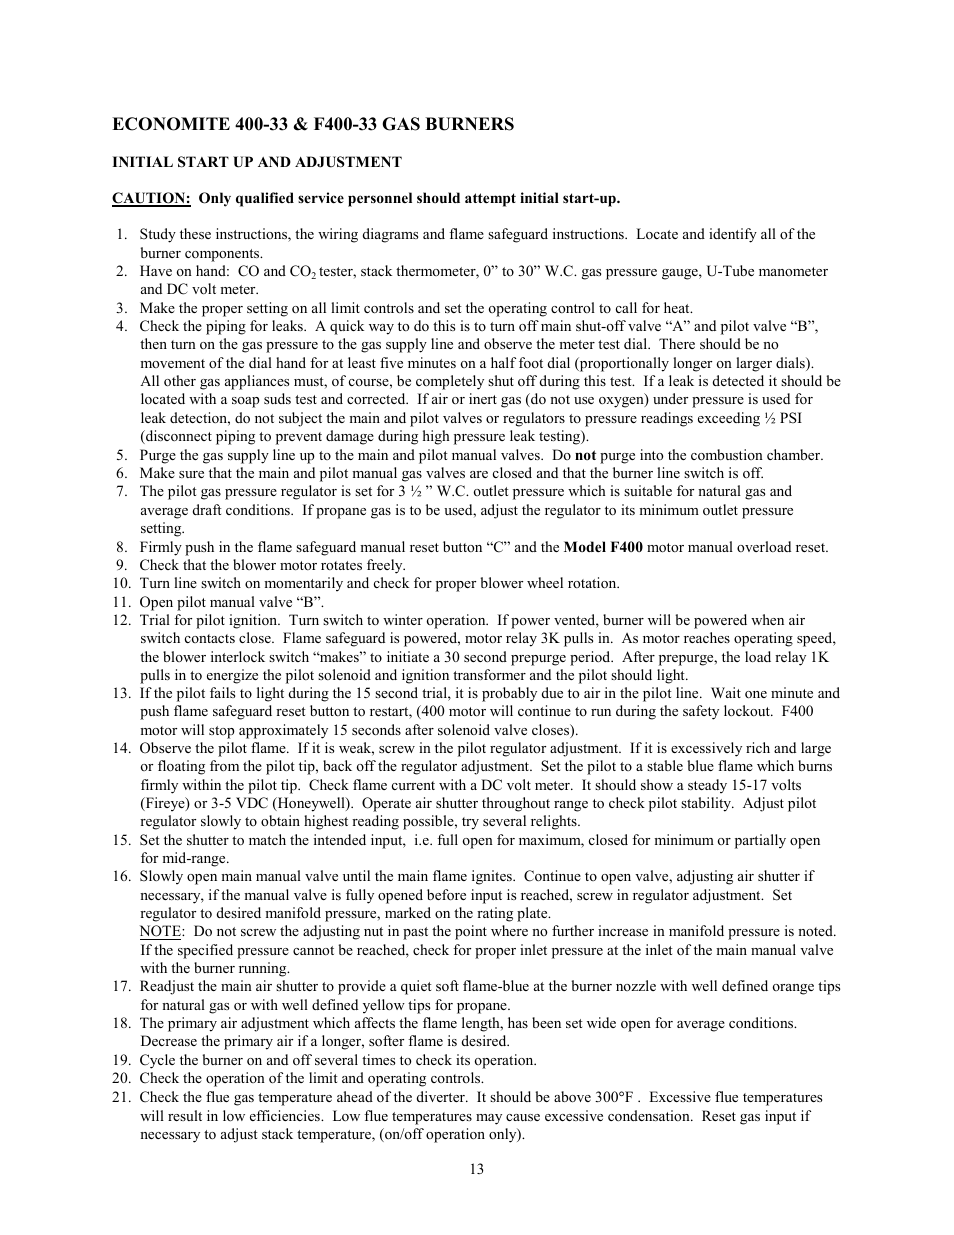 Economite gas burners | I.C.E. GIDM-325 User Manual | Page 14 / 29